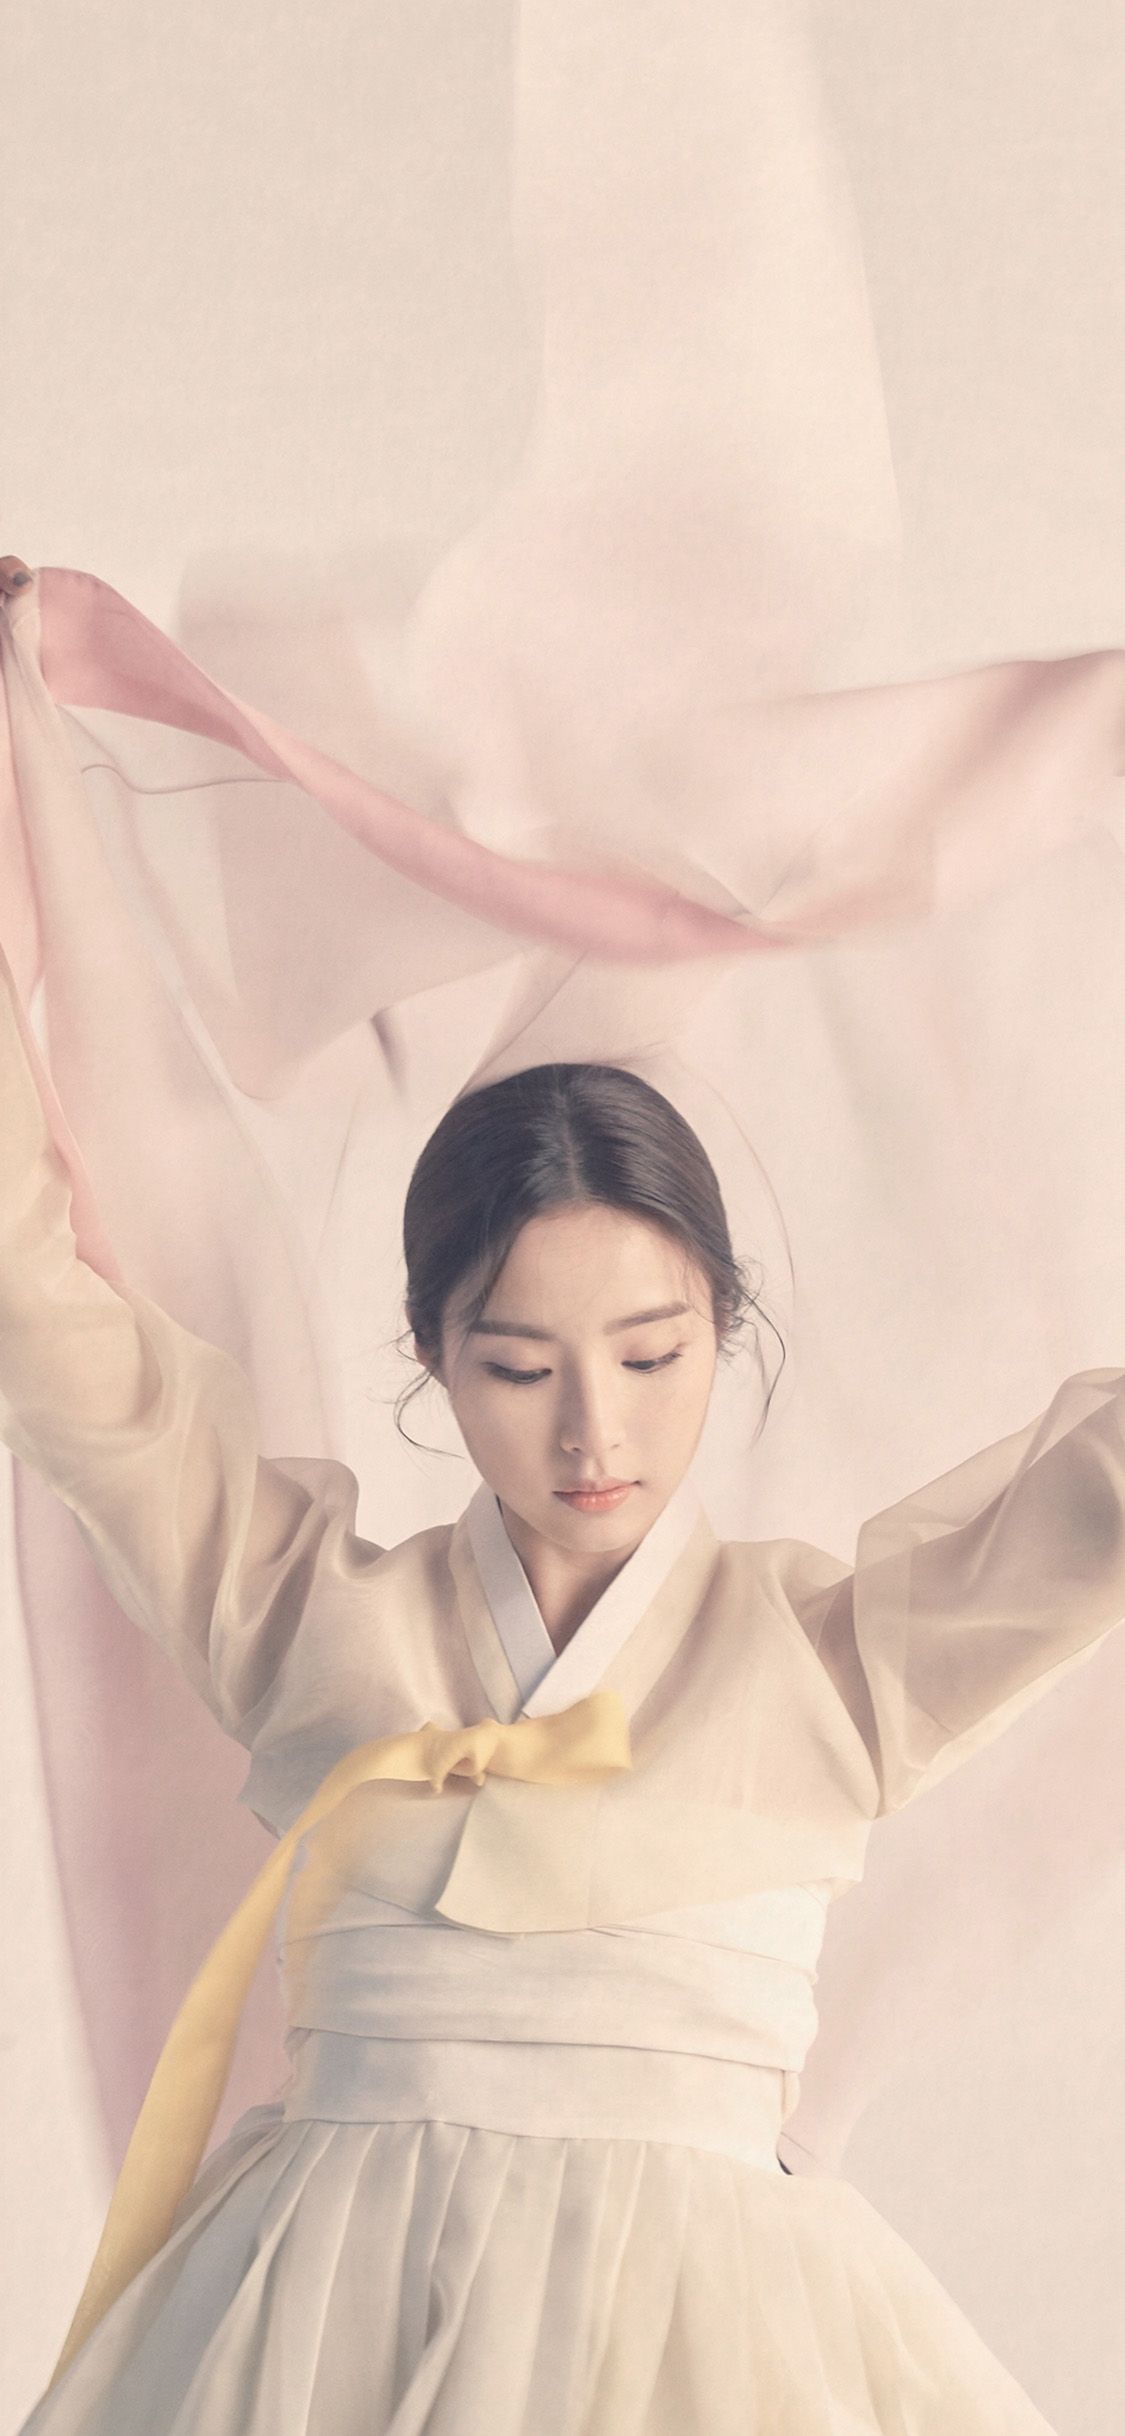 iPhone X wallpaper. korean asian kpop girl dress pink